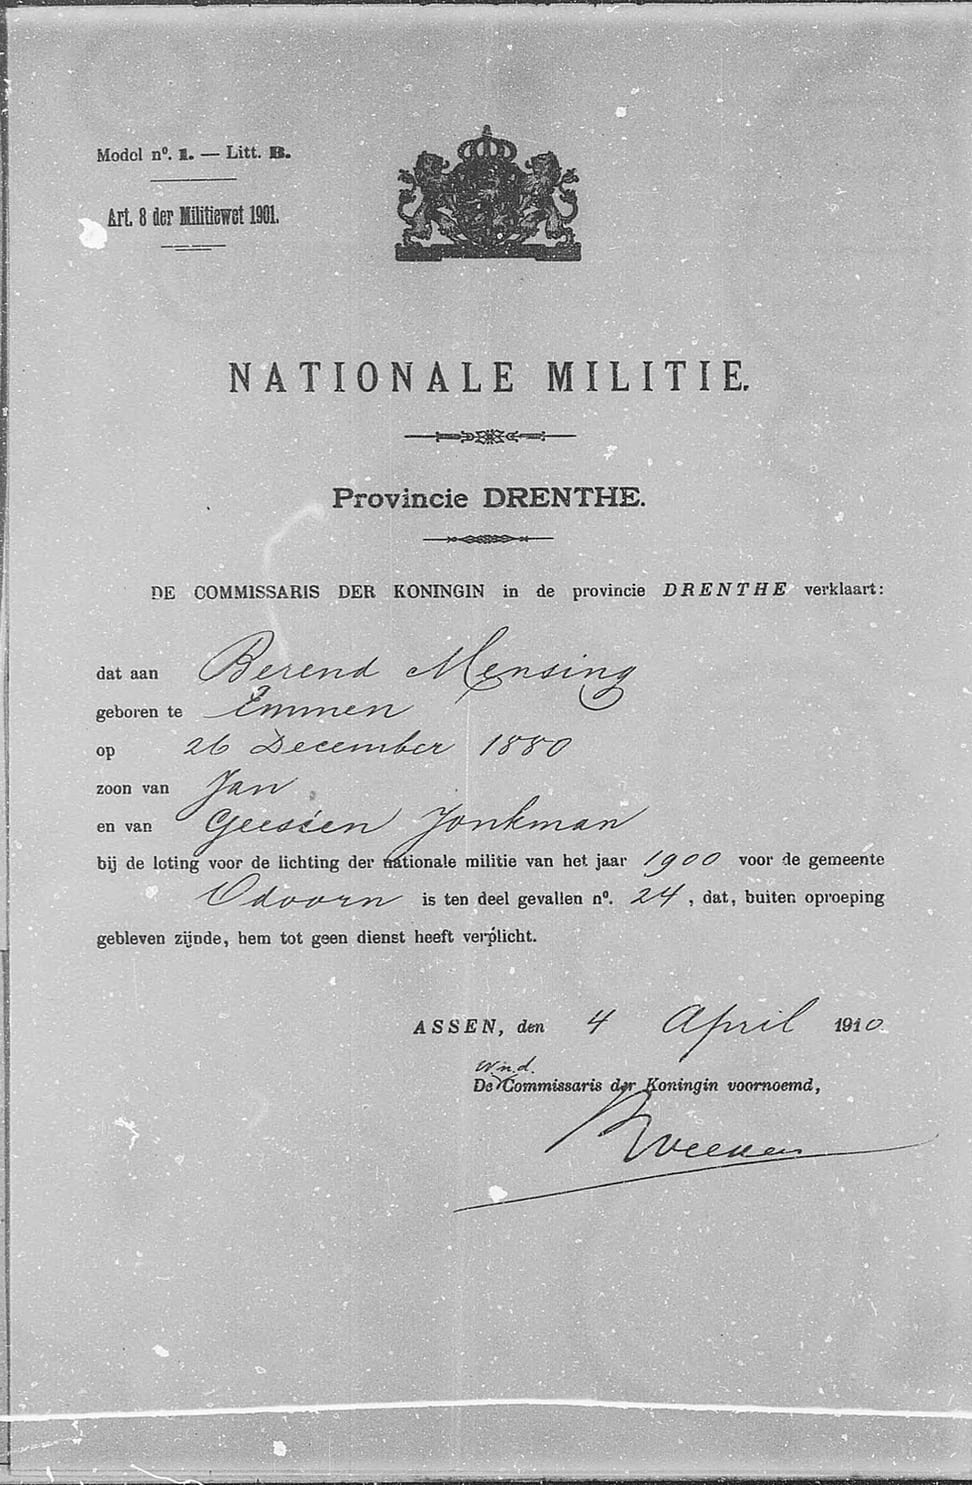 Register Nationale Militie Berend 1910